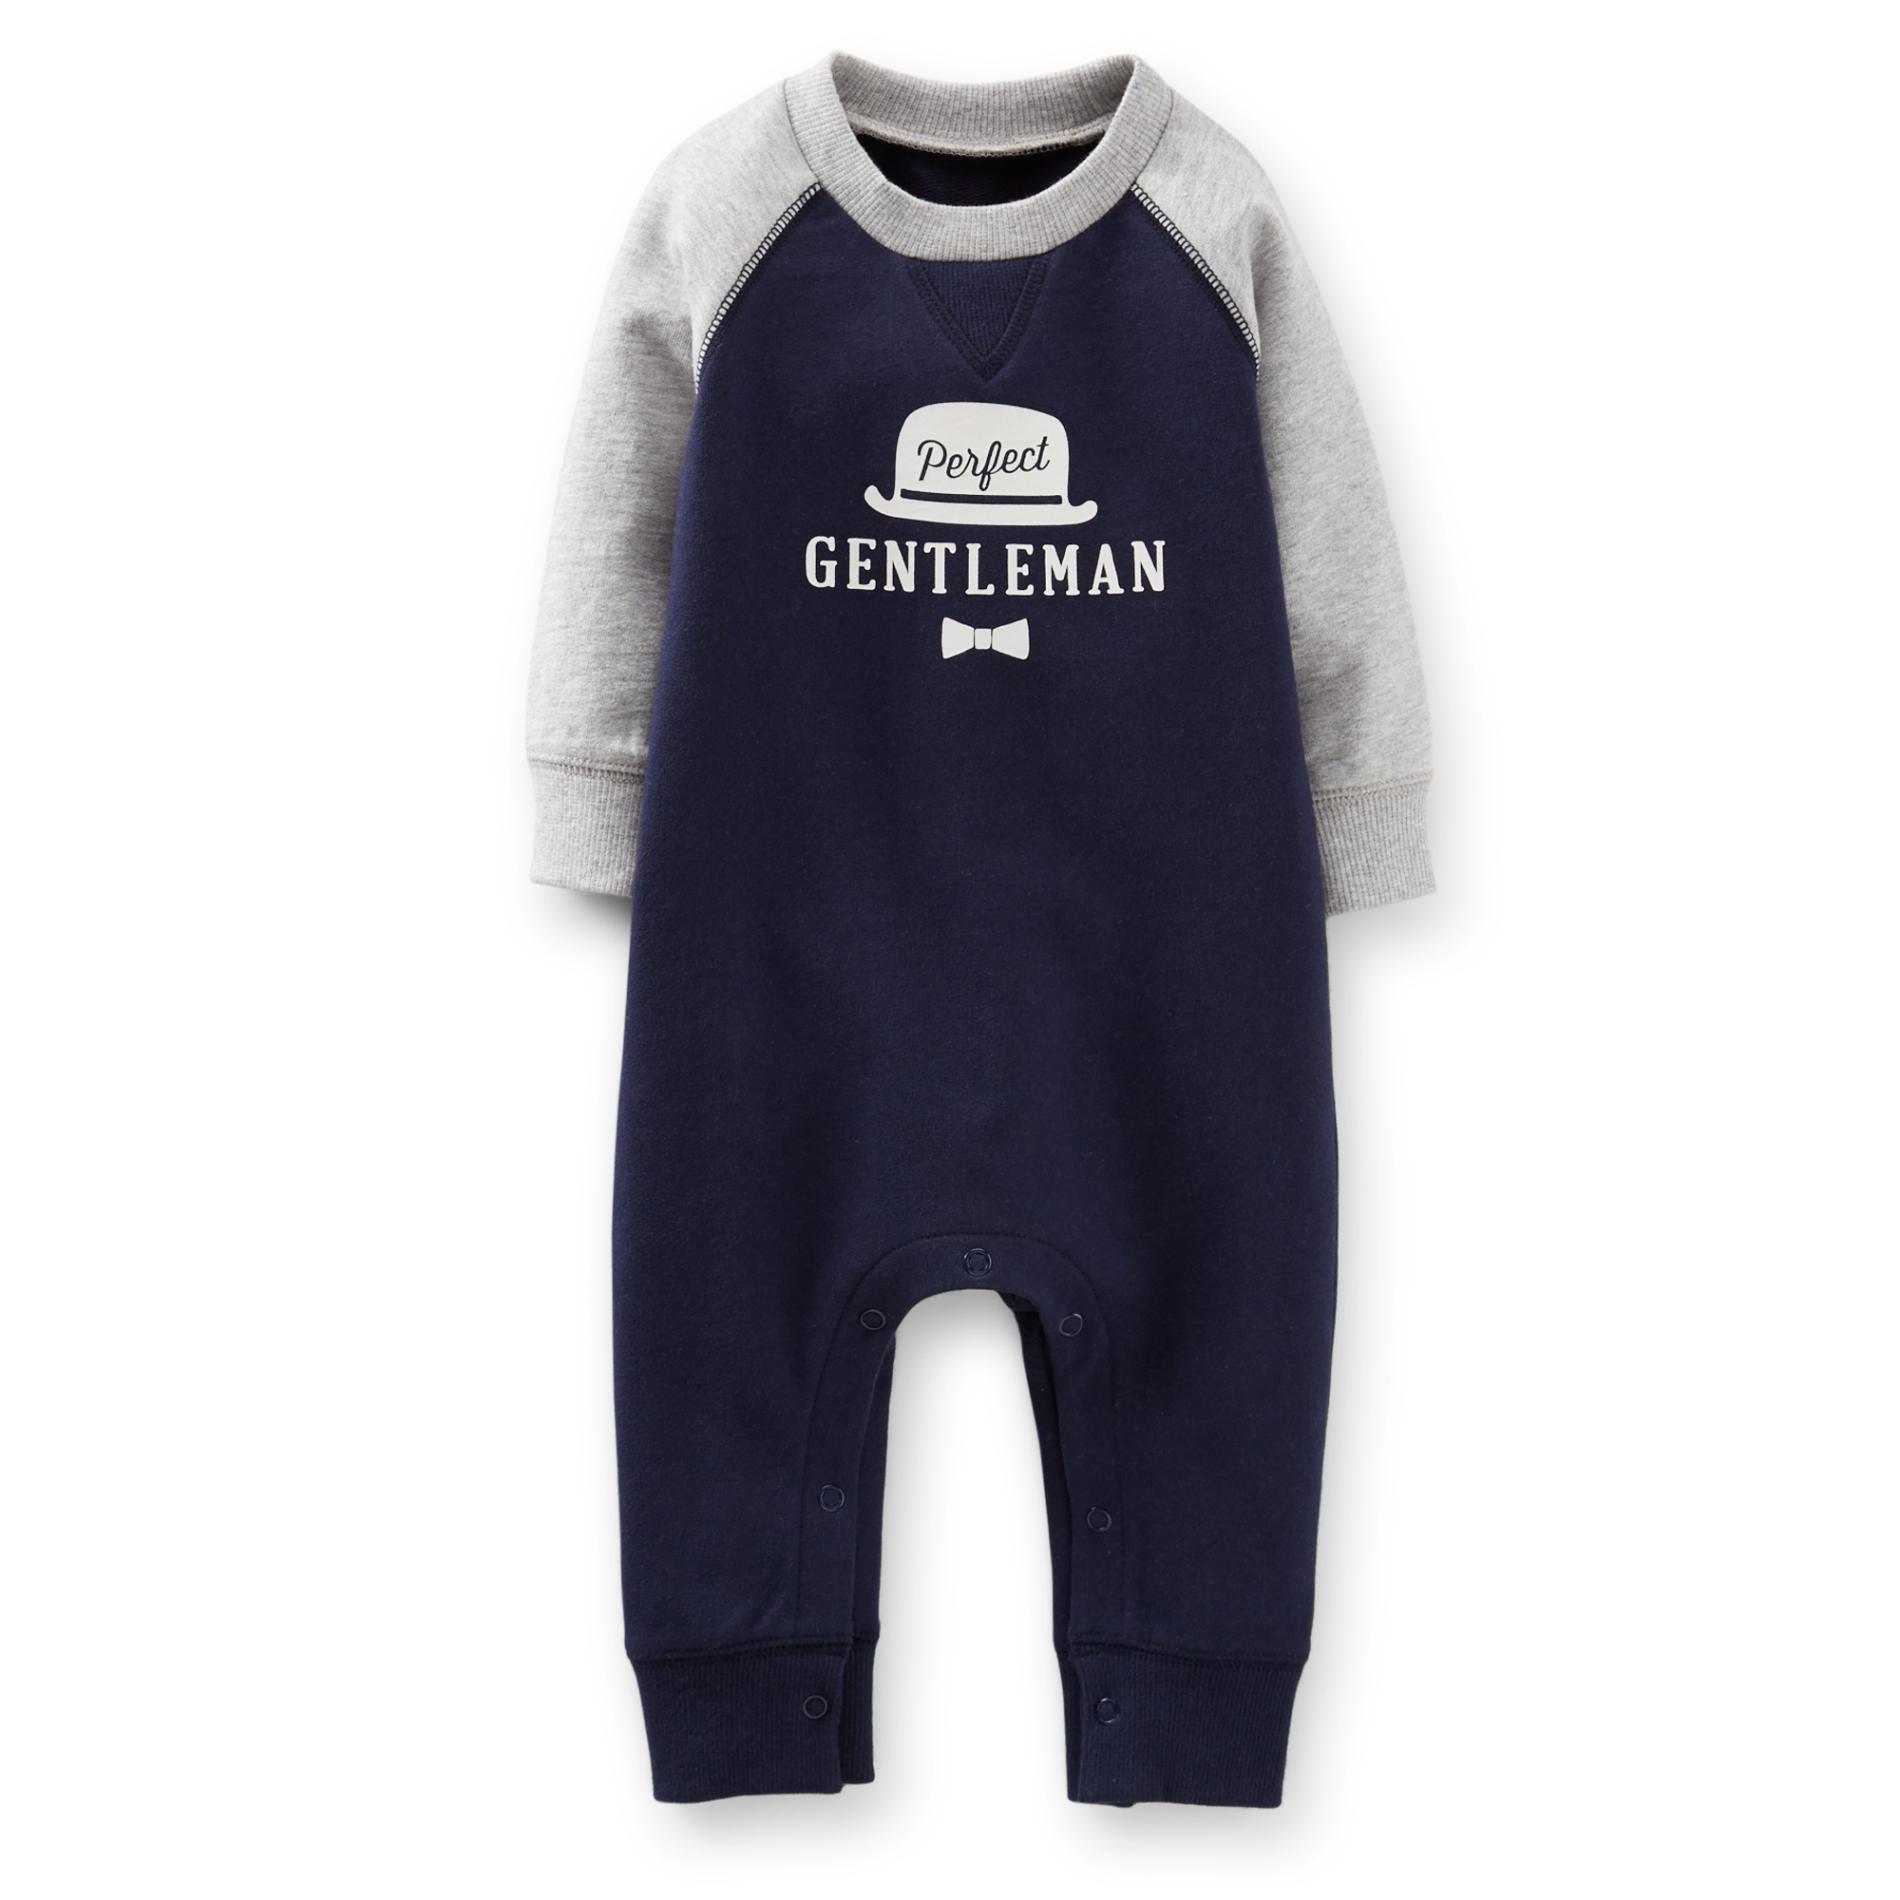 Carter's Newborn & Infant Boy's Raglan Jumpsuit - Perfect Gentleman